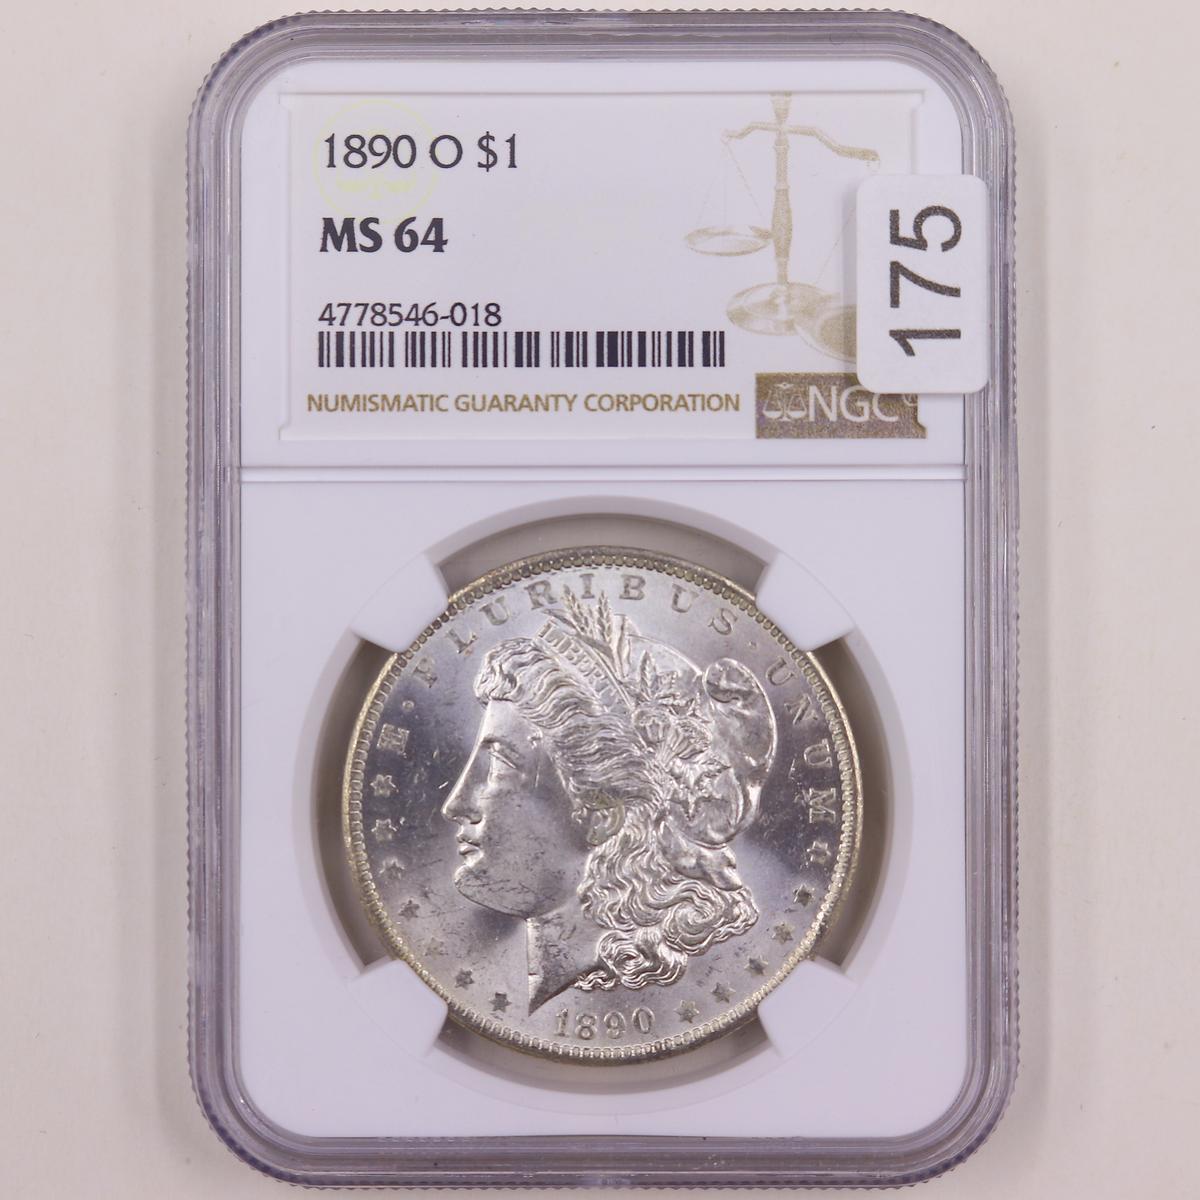 Certified 1890-O U.S. Morgan silver dollar